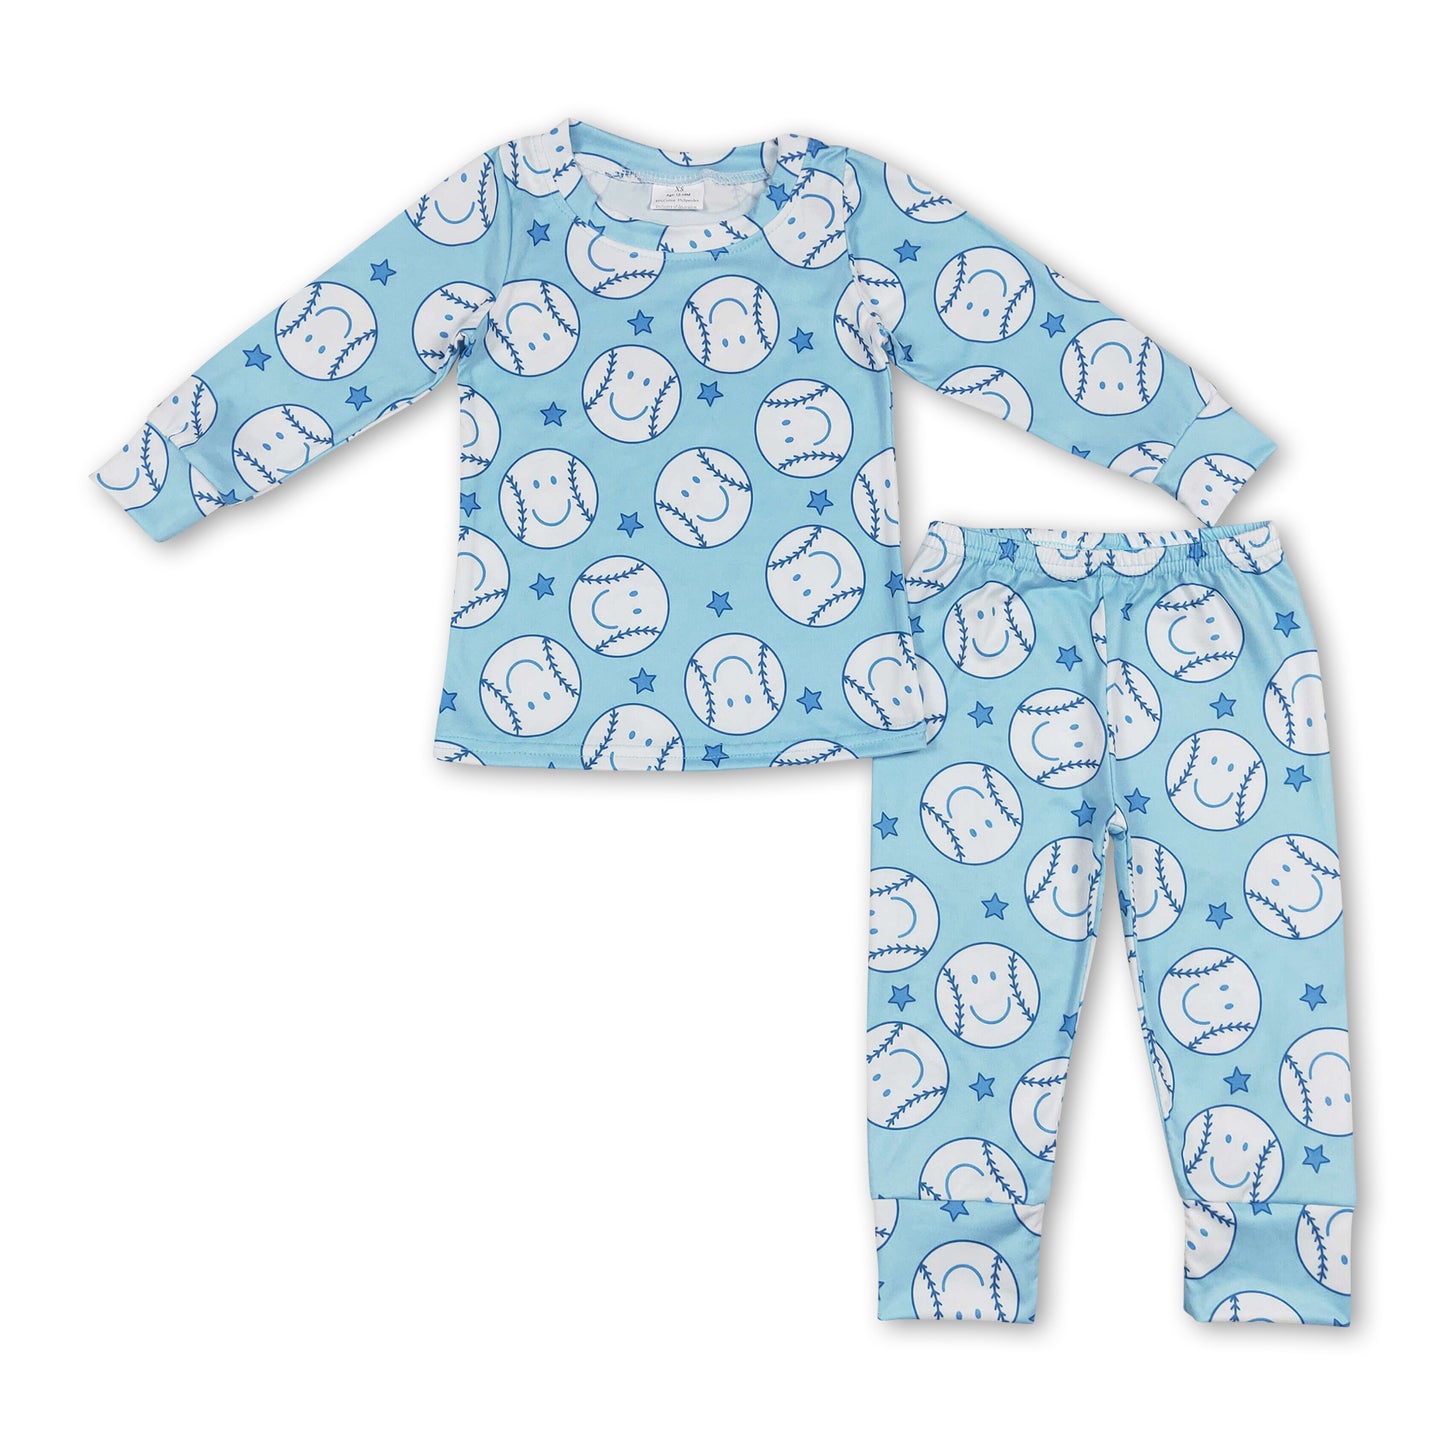 Blue star baseball long sleeves kids boy pajamas